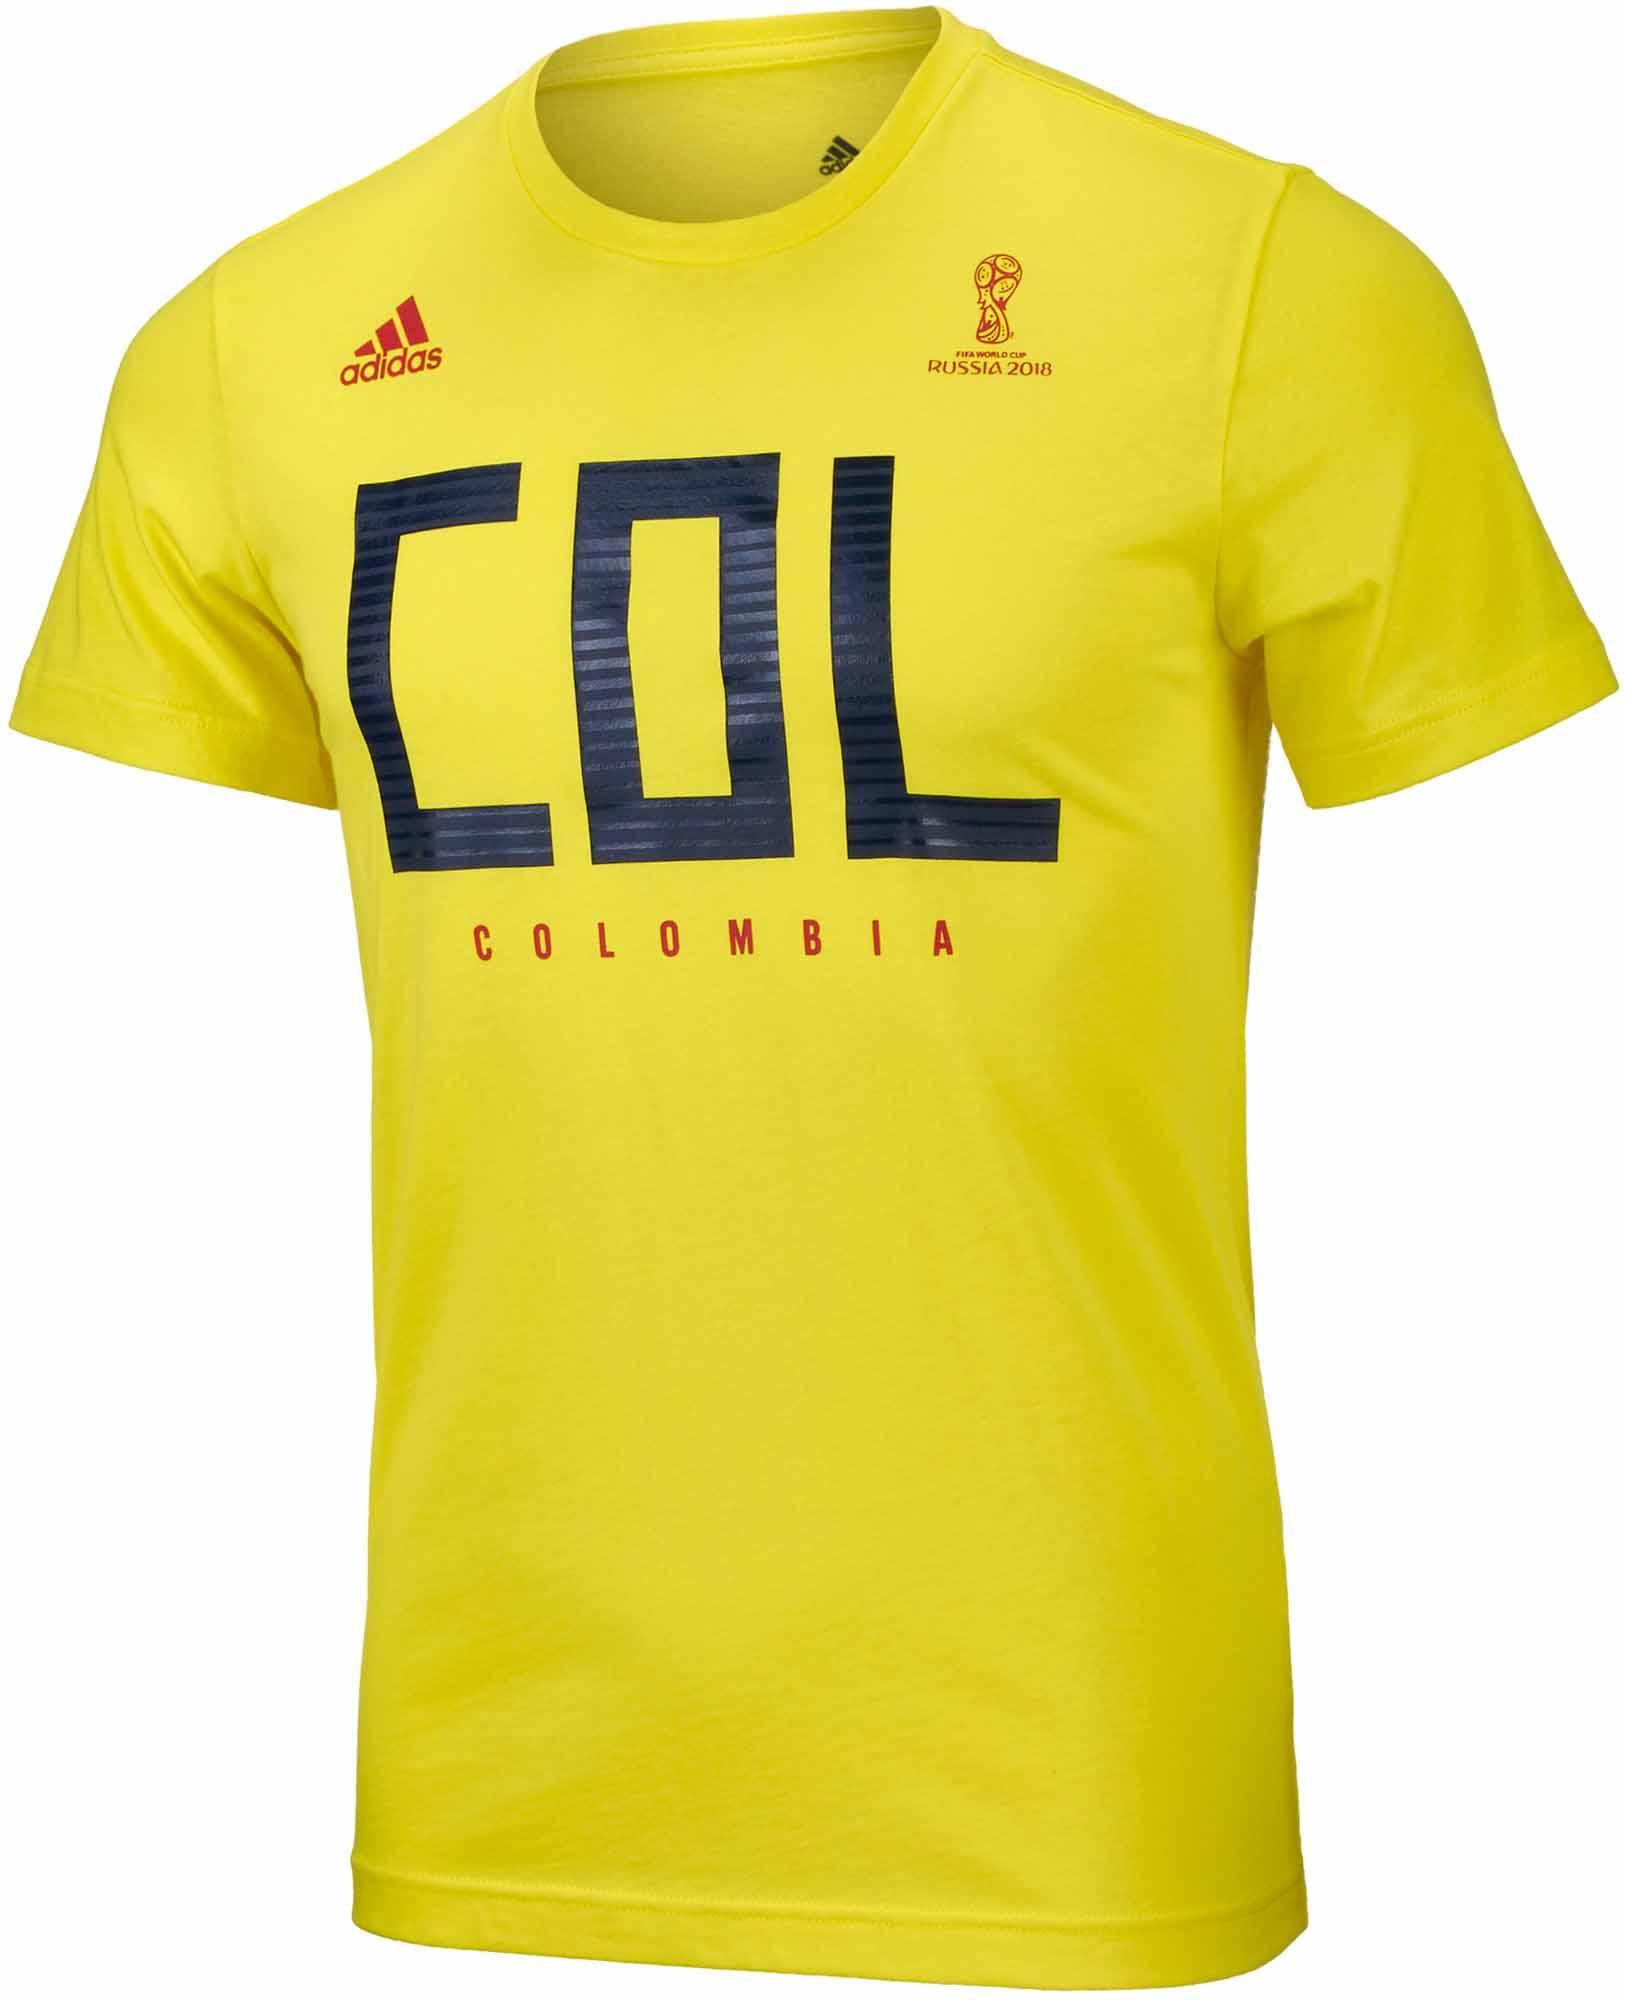 adidas Colombia - Bright Yellow SoccerPro